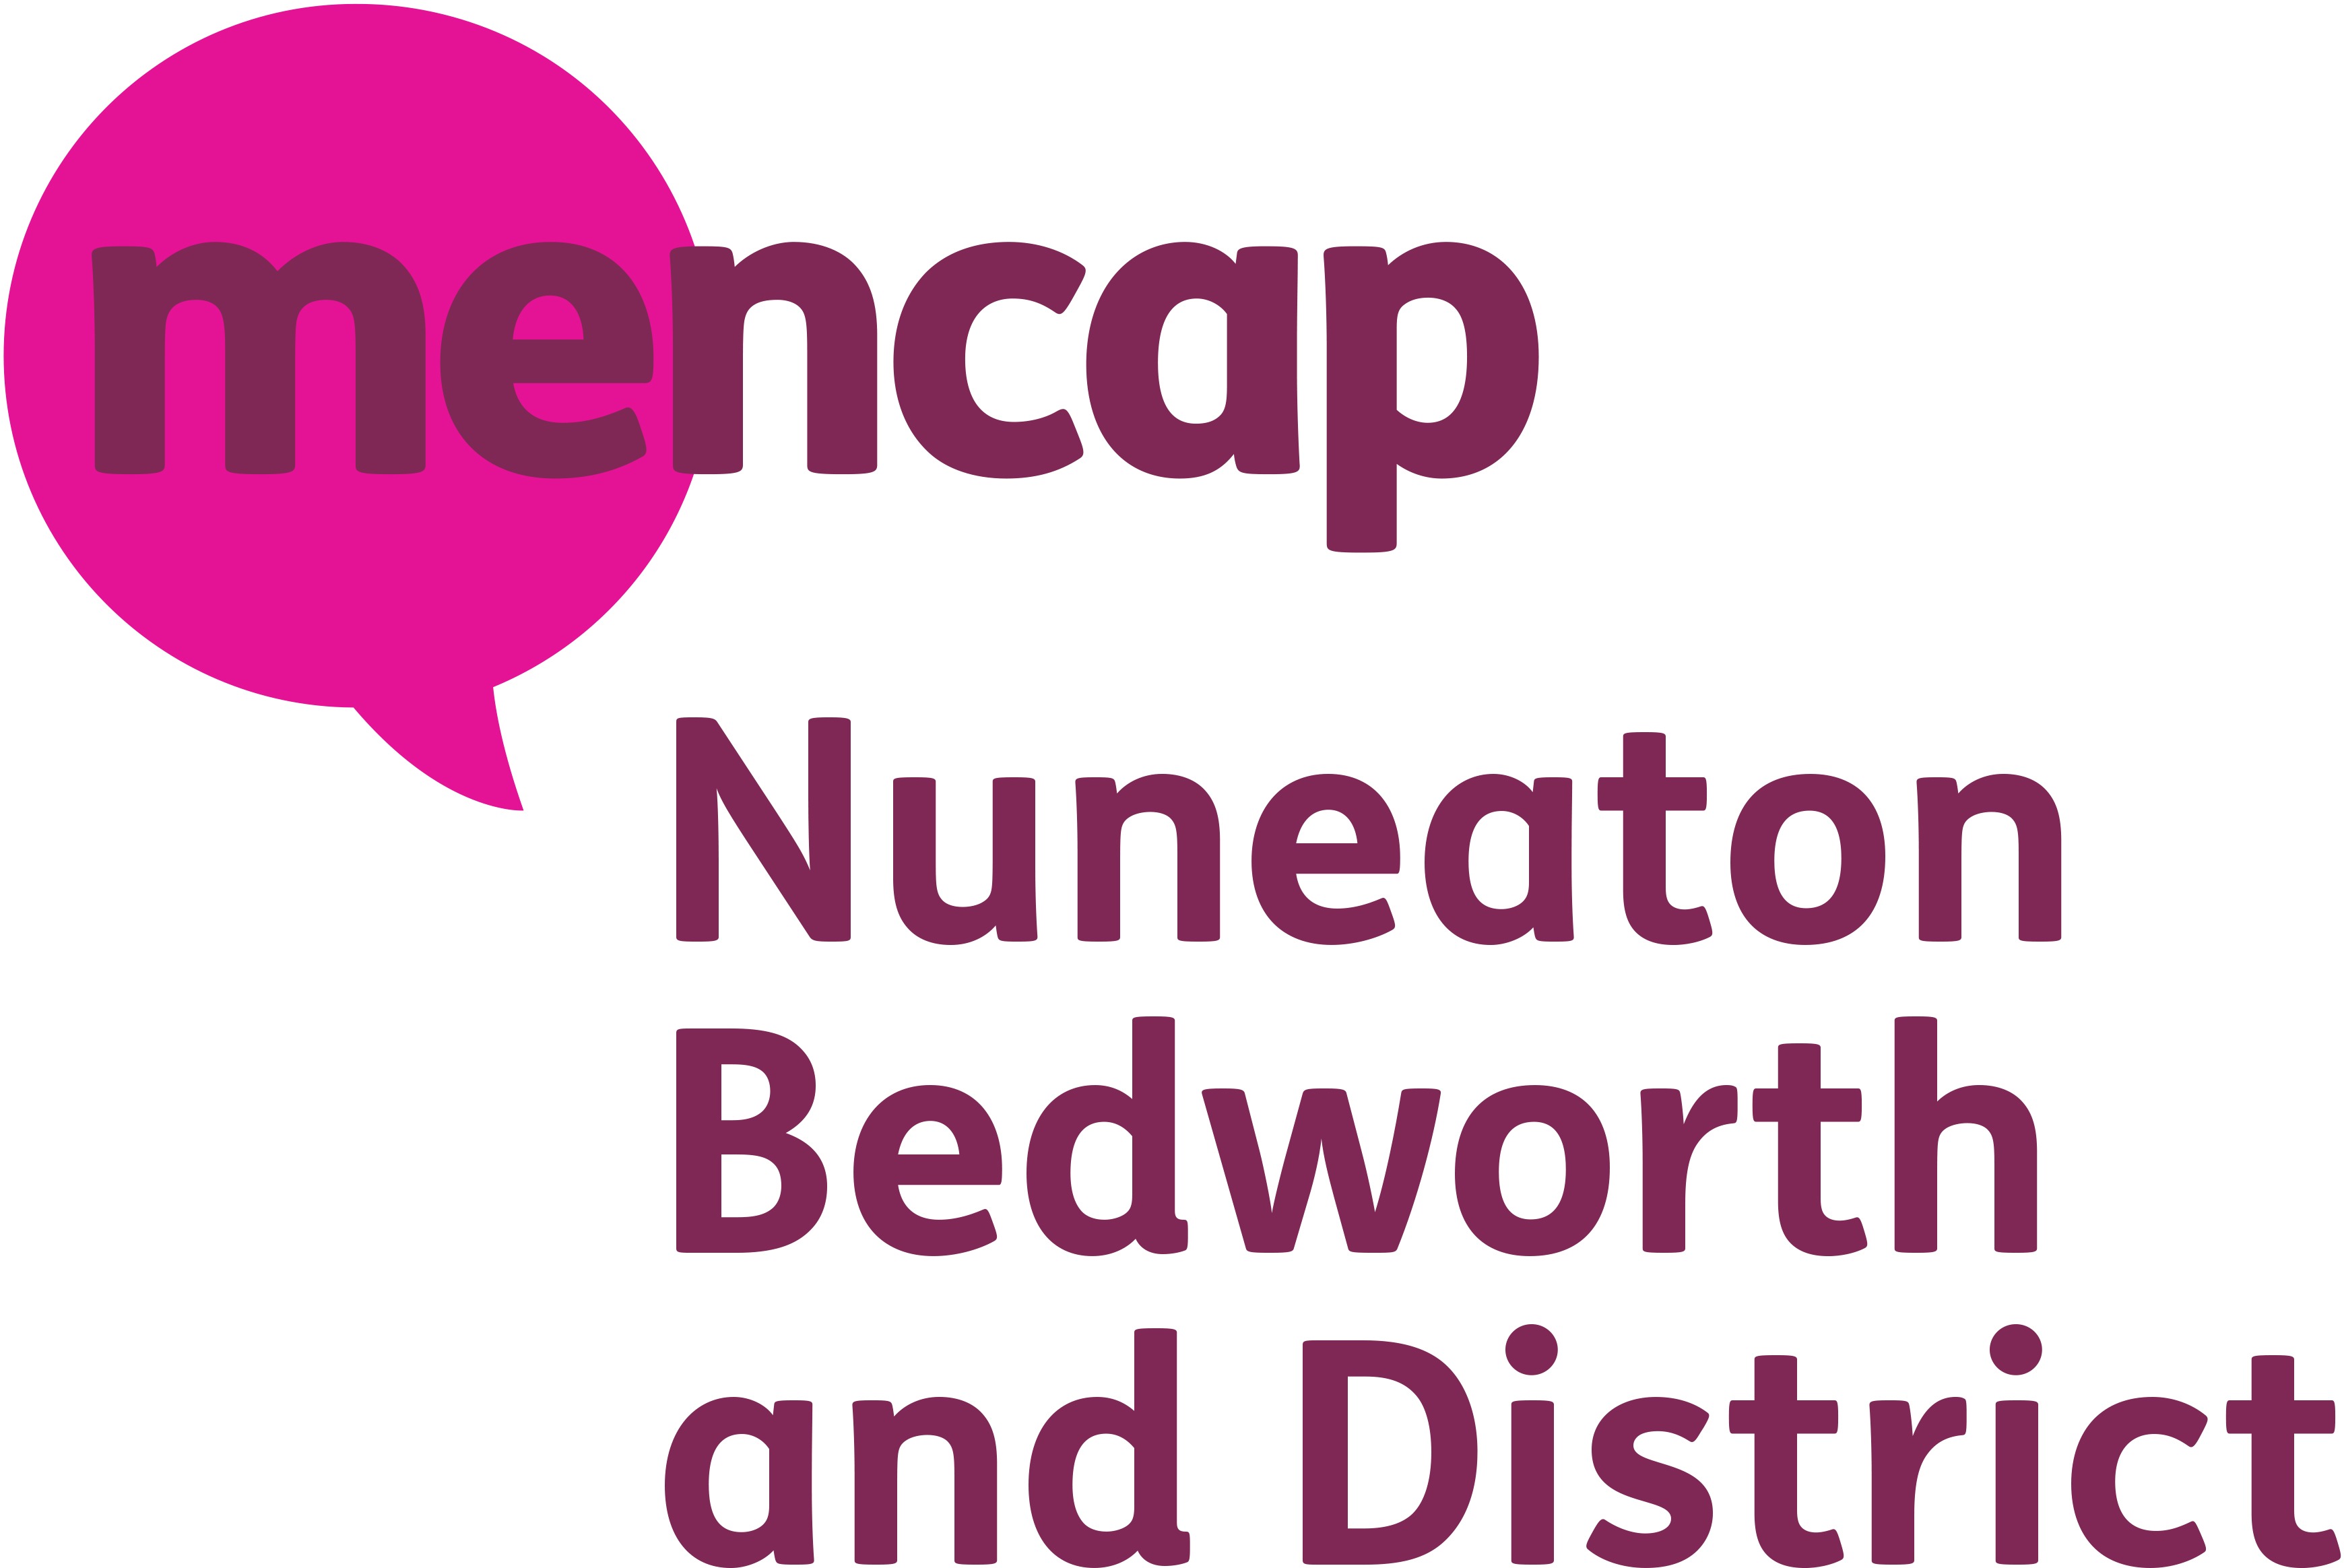 Nuneaton Bedworth and District Mencap Society